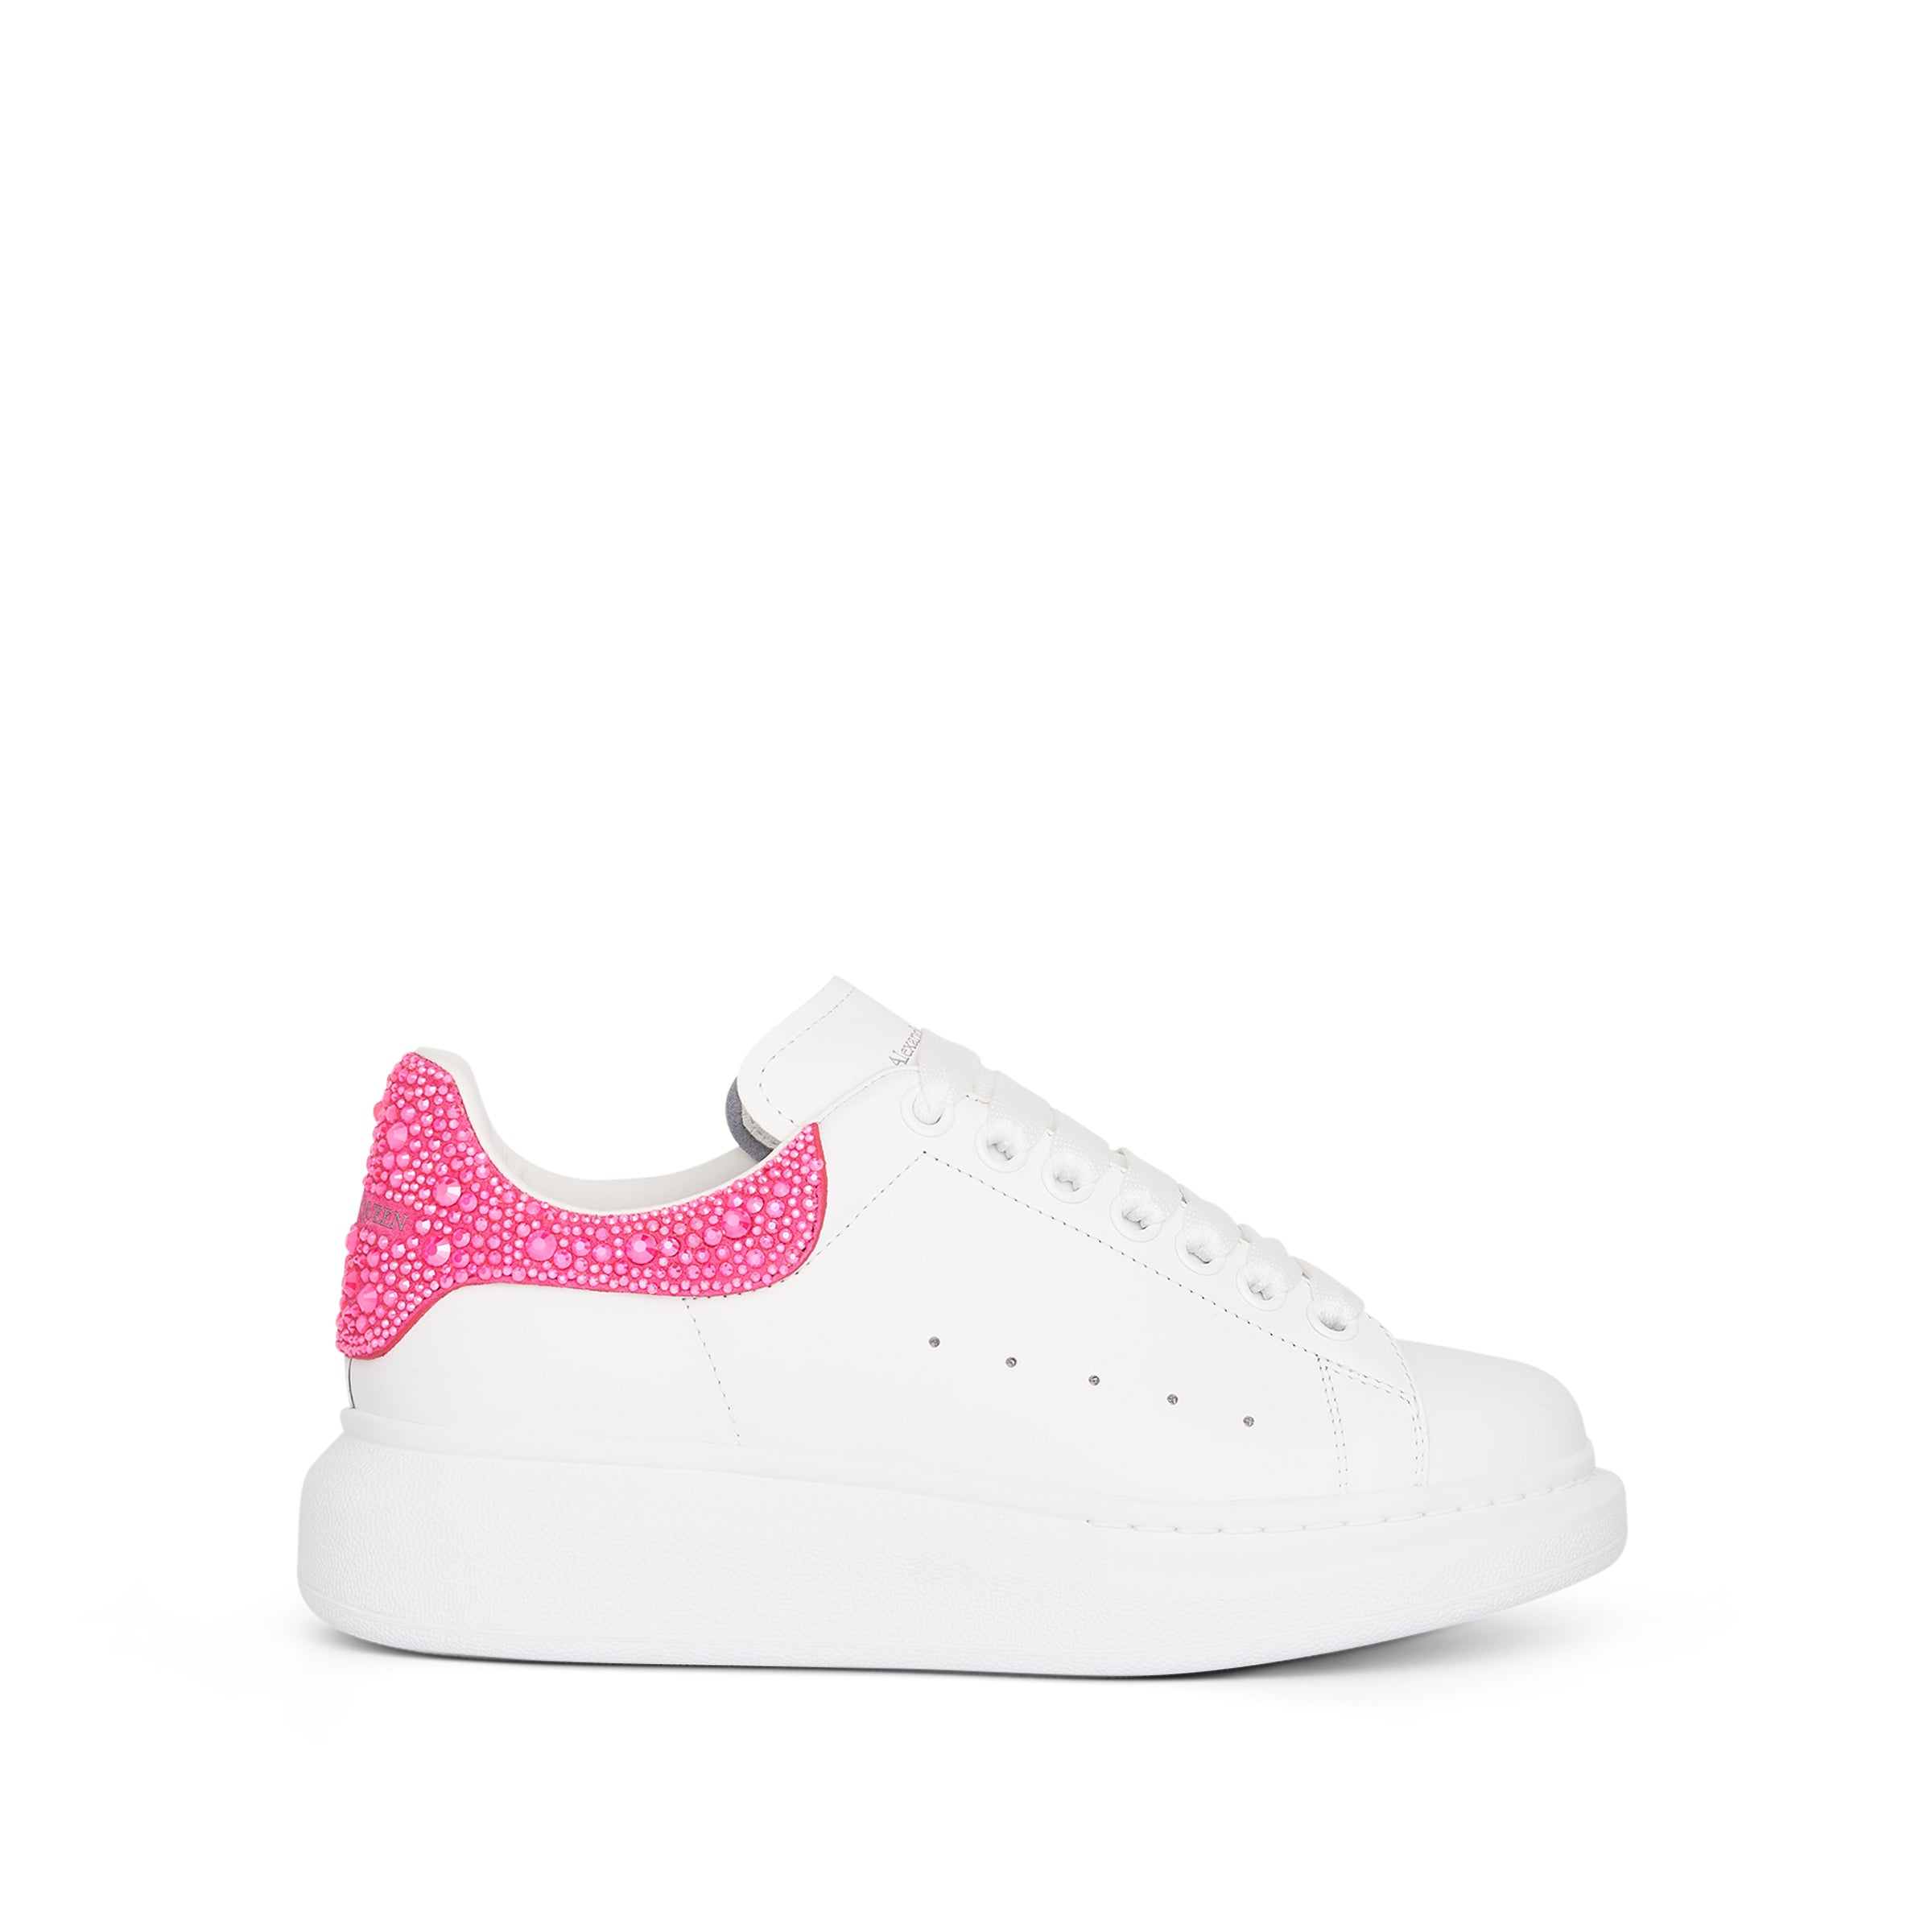 ALEXANDER McQUEEN Larry Oversized Suede Sneaker in White/Halo Pink – MARAIS